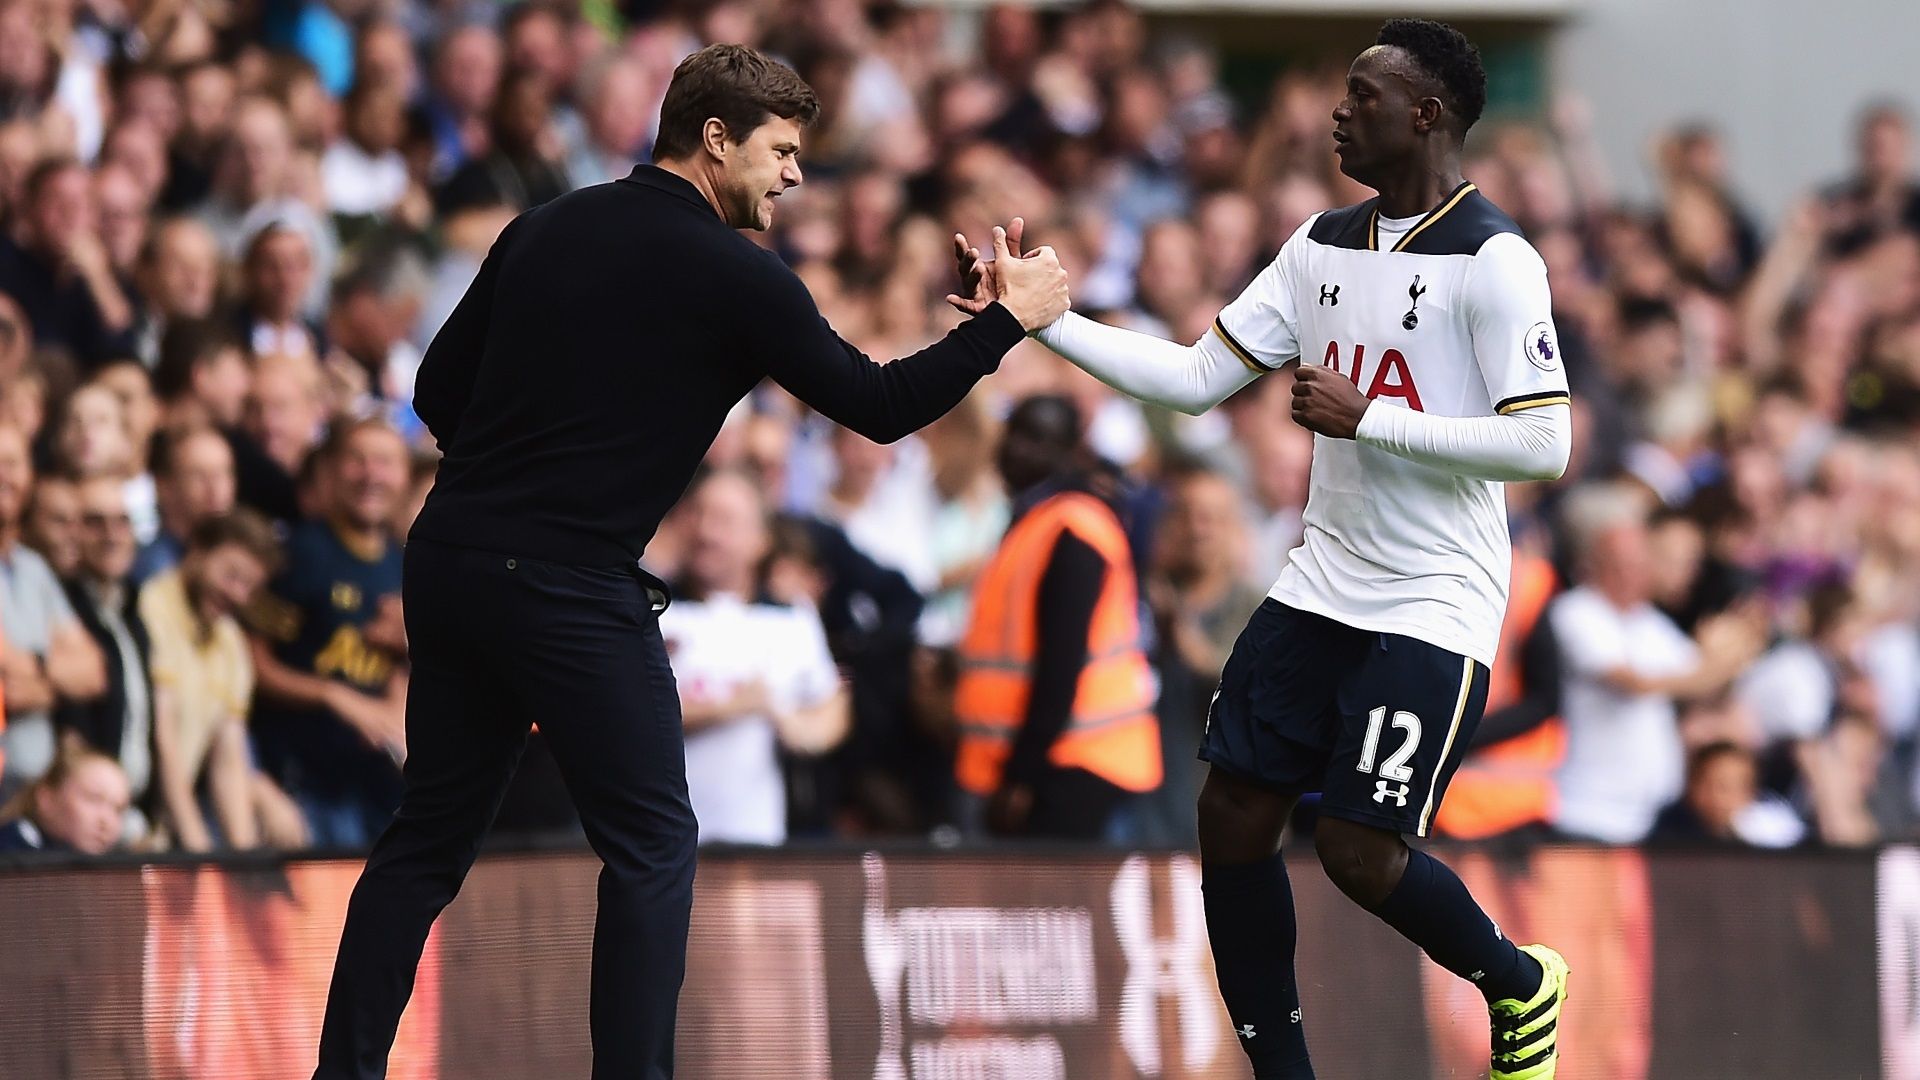 Kenyan international Victor Wanyama has revealed what life was like playing under Jose Mourinho at Tottenham Hotspur